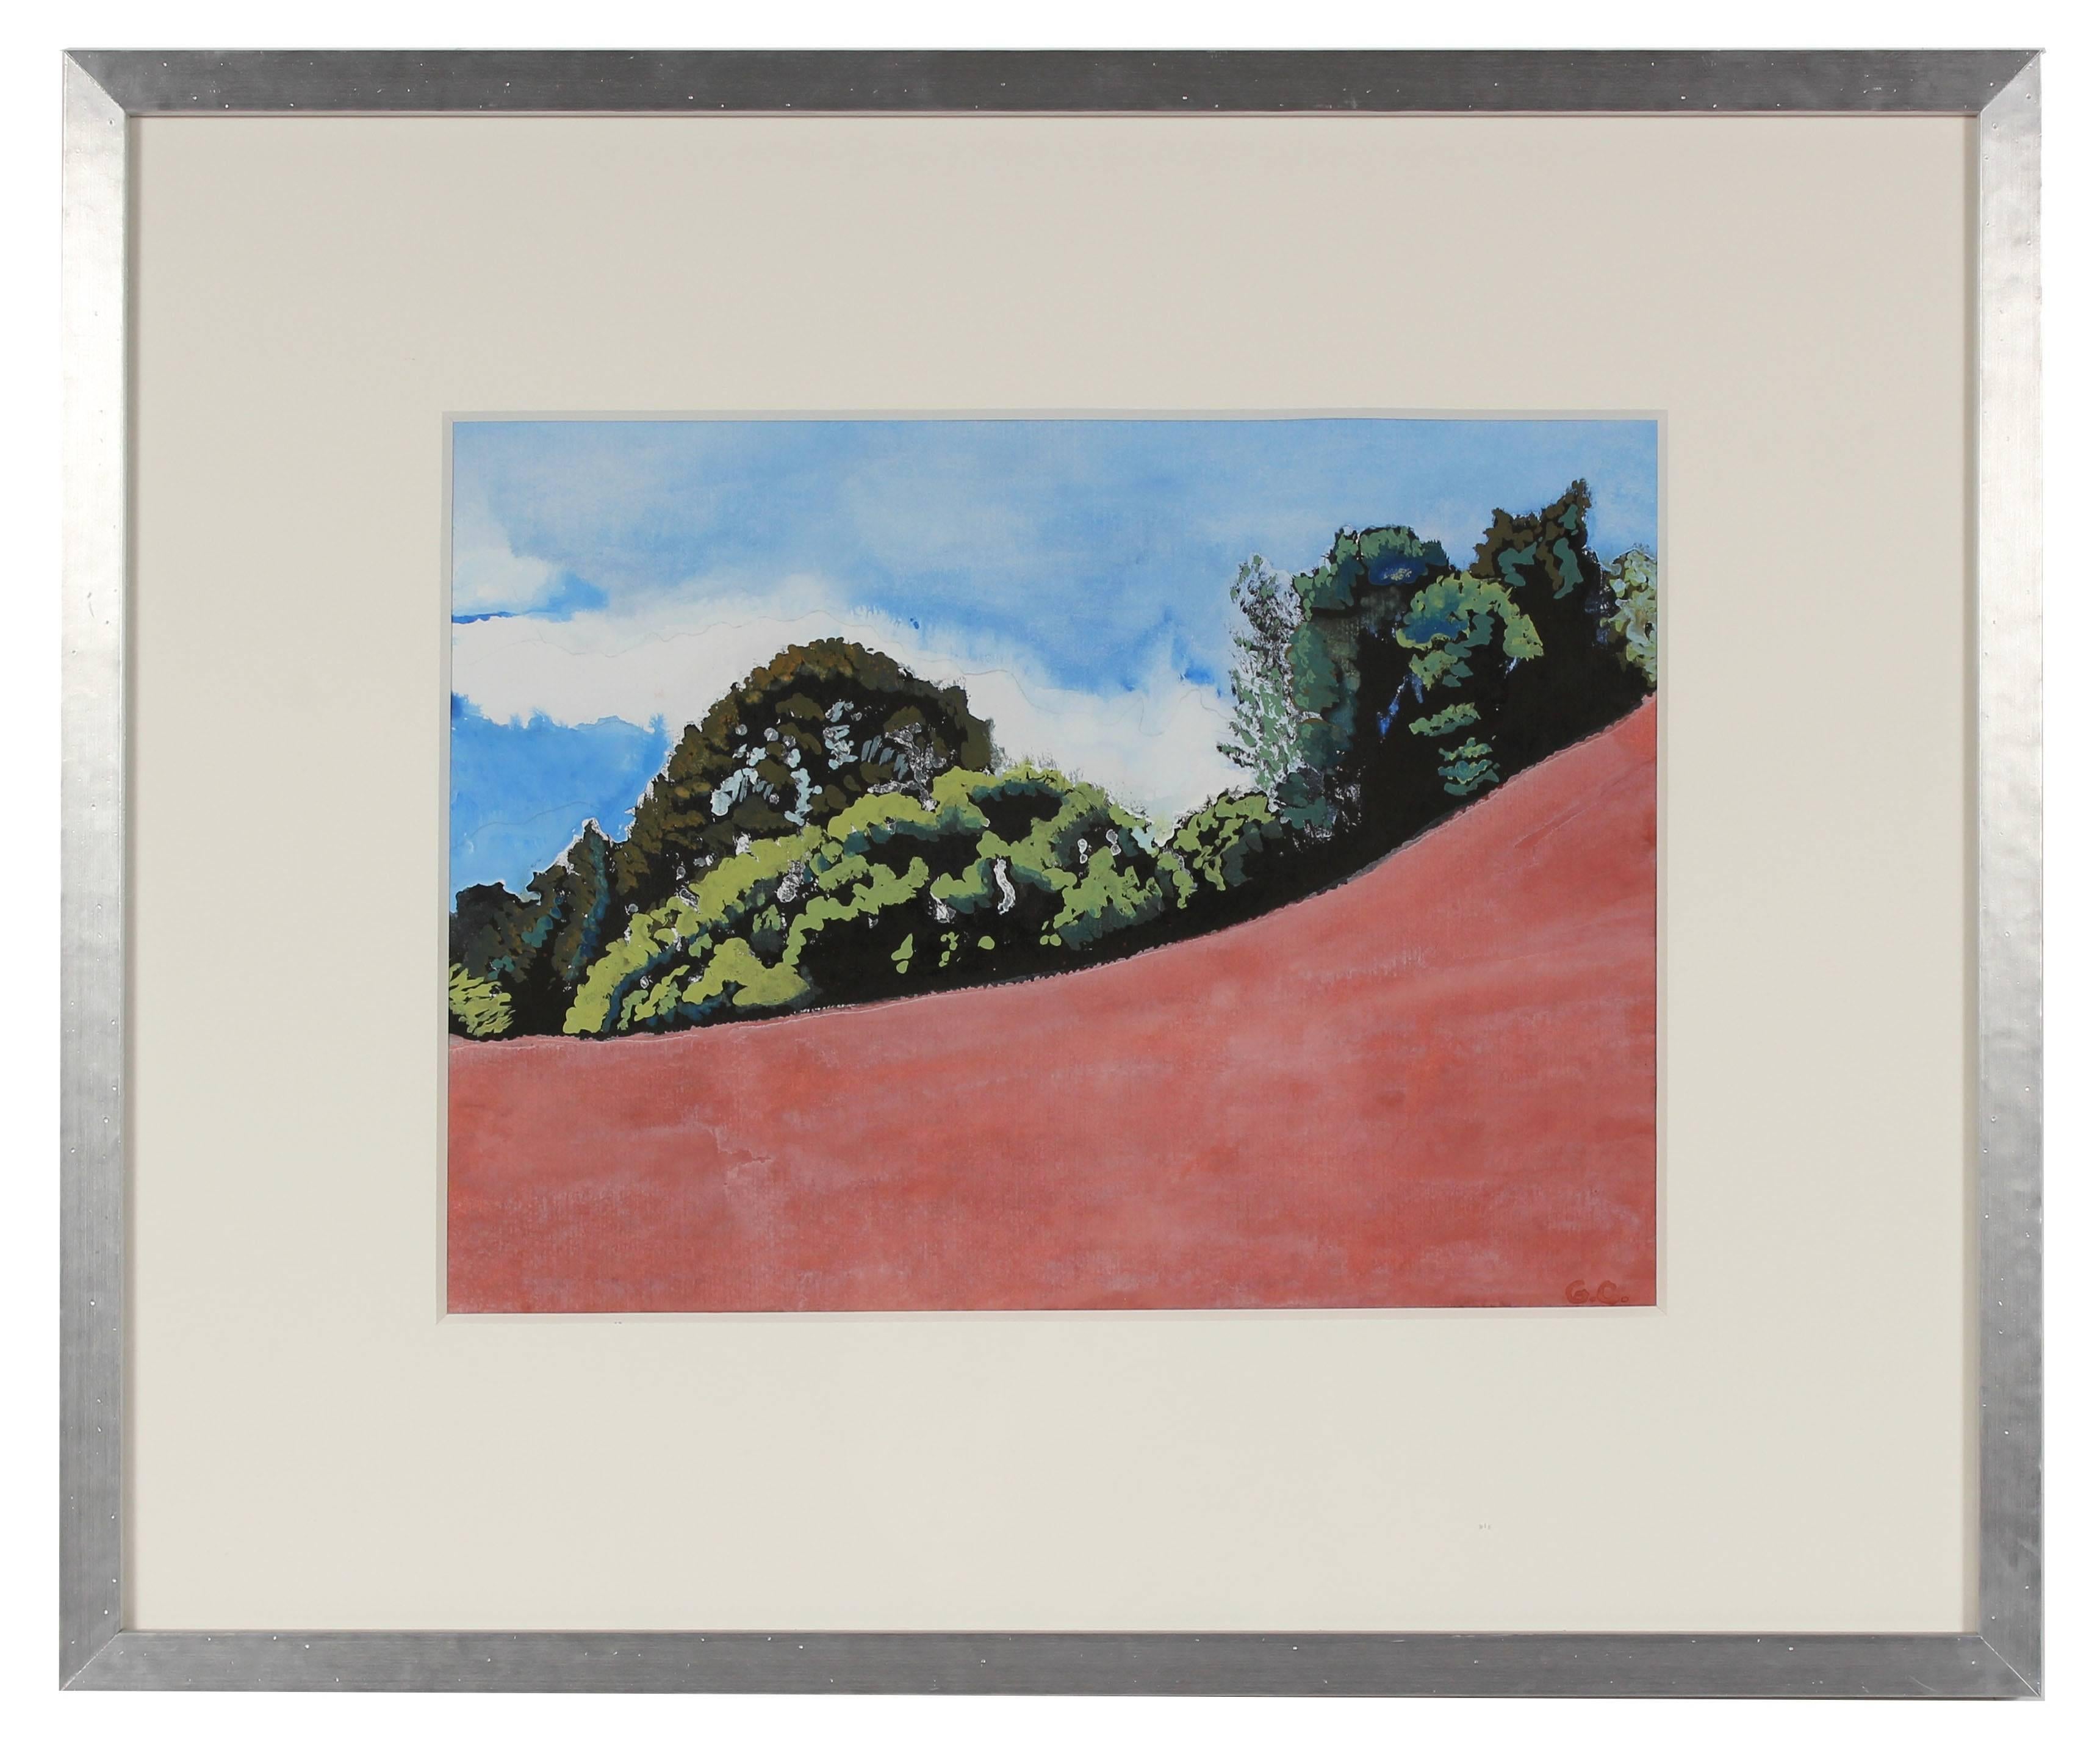 Gaétan Caron Landscape Art - "Pink Meadow" Mendocino Landscape in Watercolor and Ink, 2016